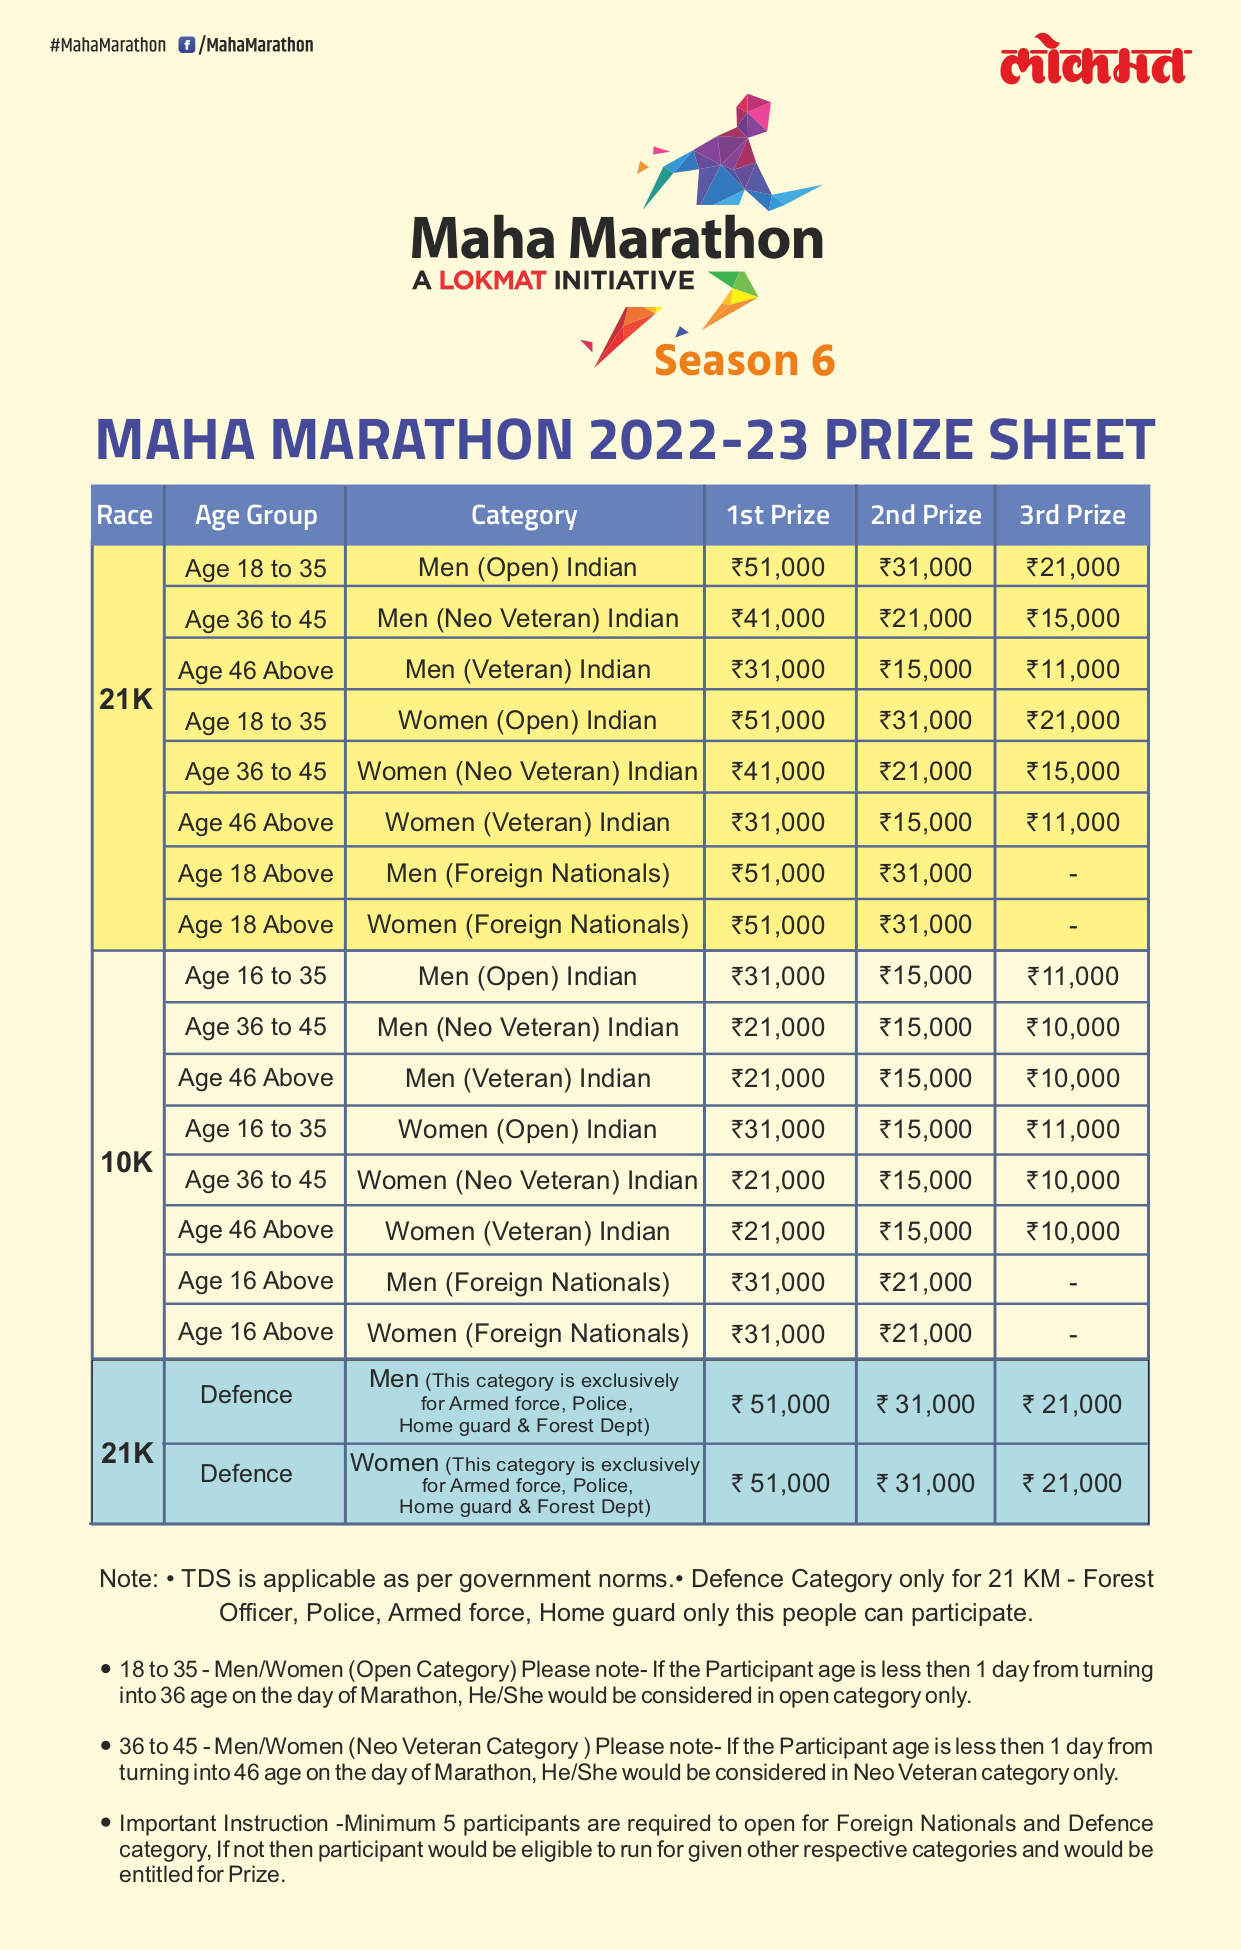 Prizes Aurangabad Maha Marathon